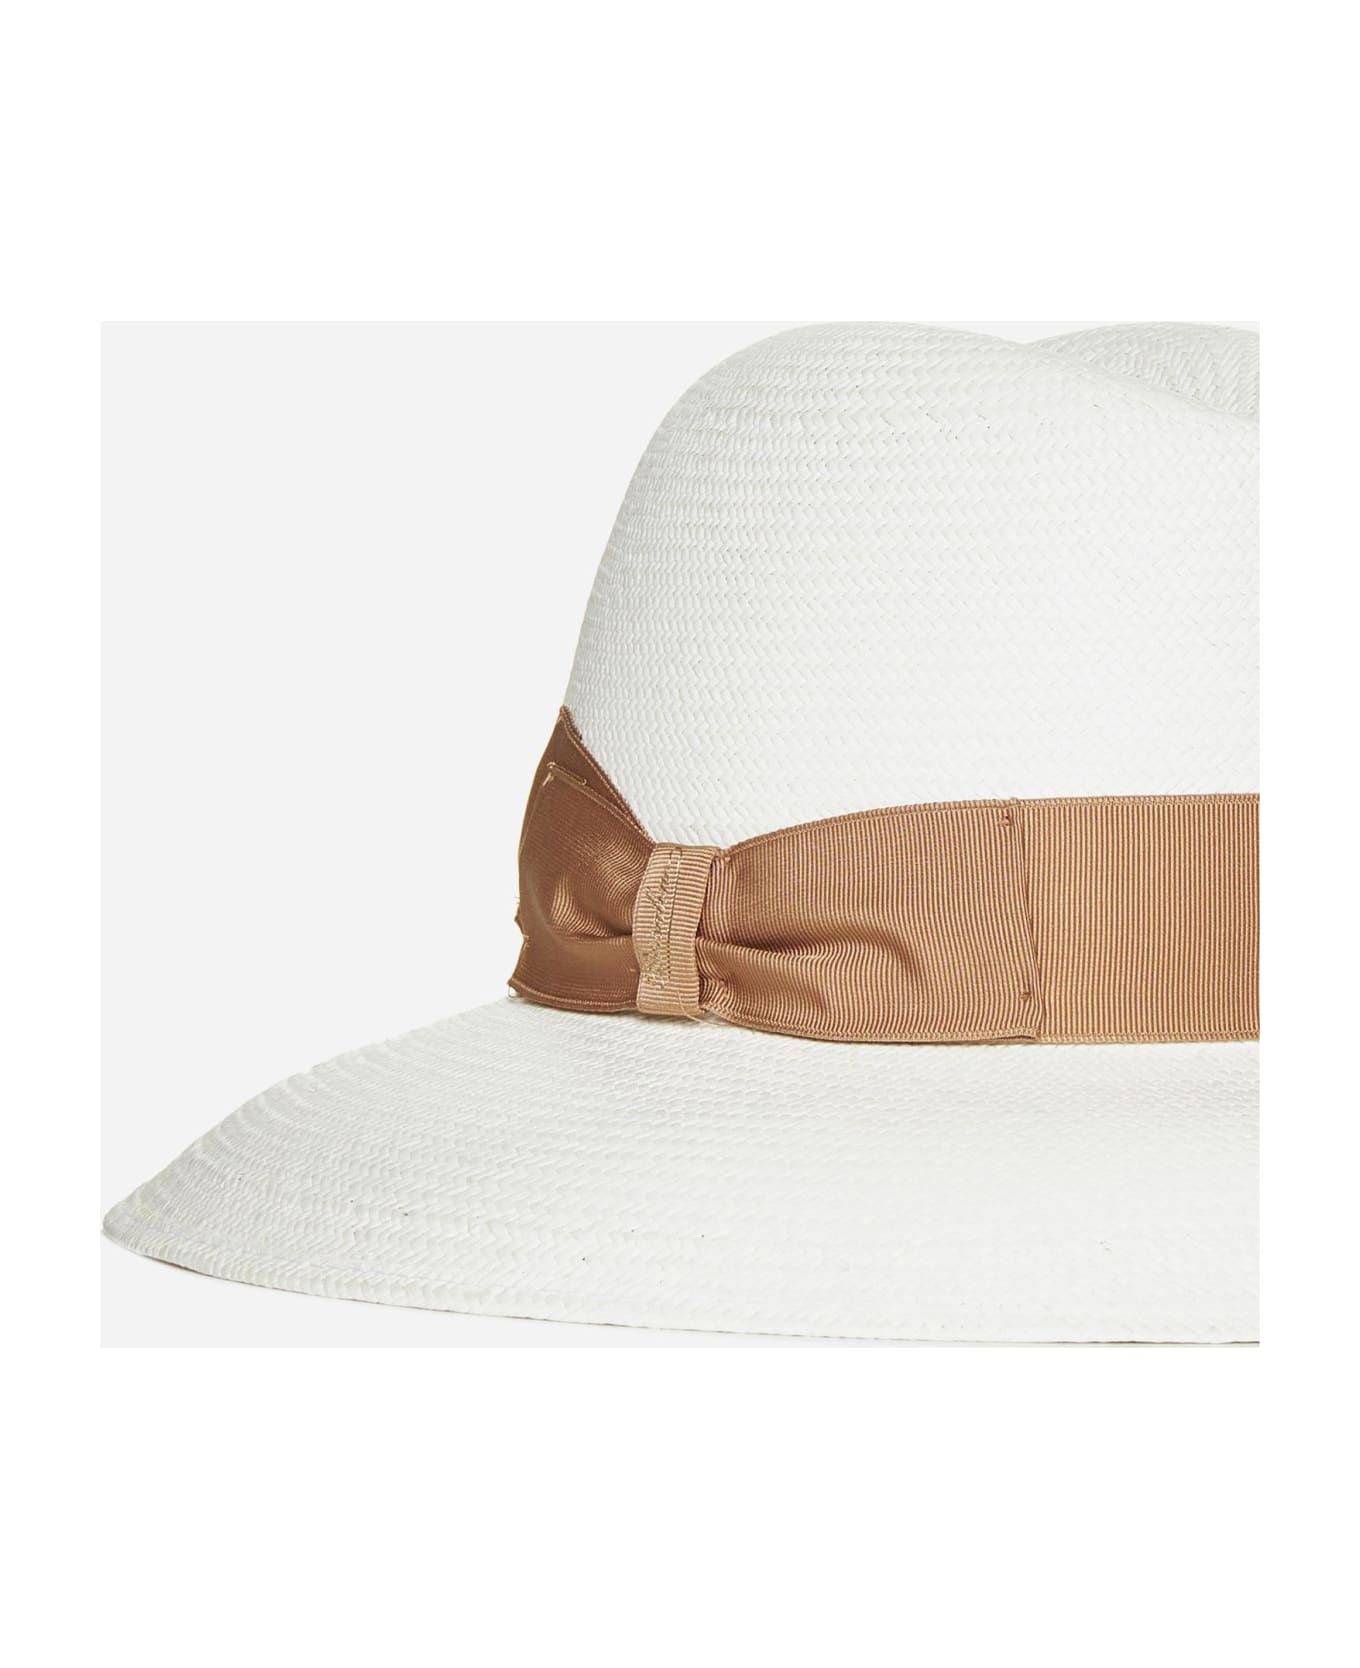 Borsalino Caludette Large Brim Panama Hat - Beige